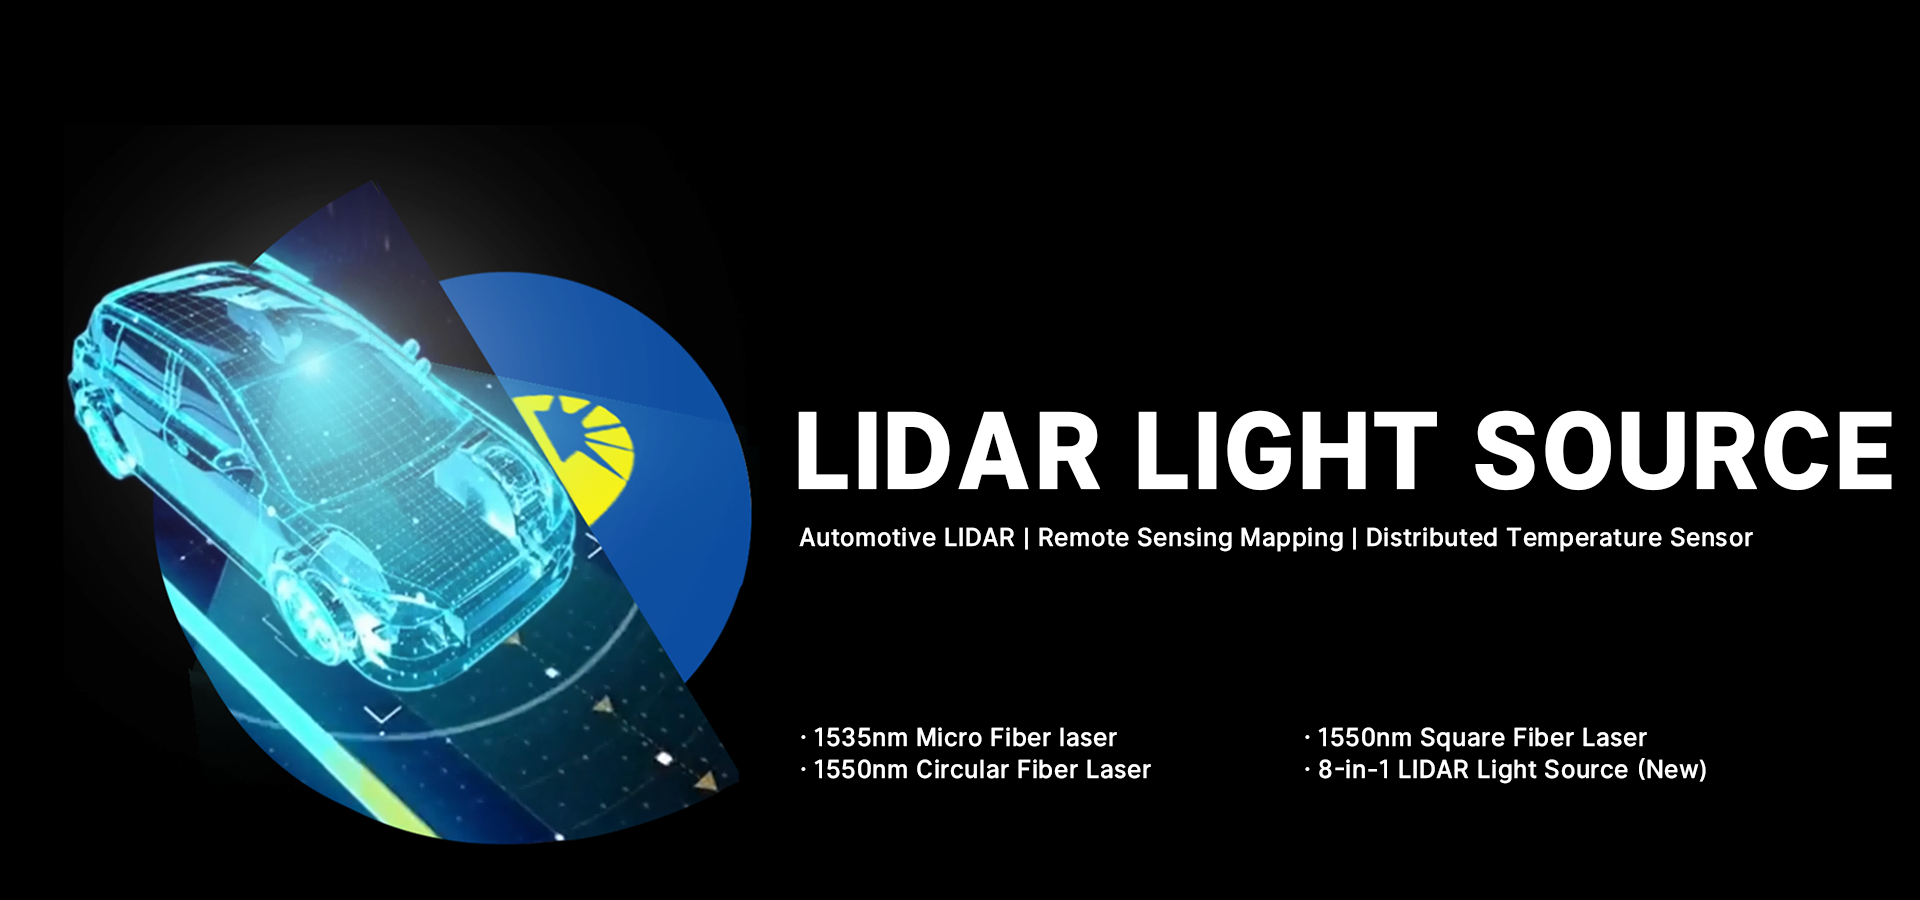 New Lidar LIGHT SOURCE